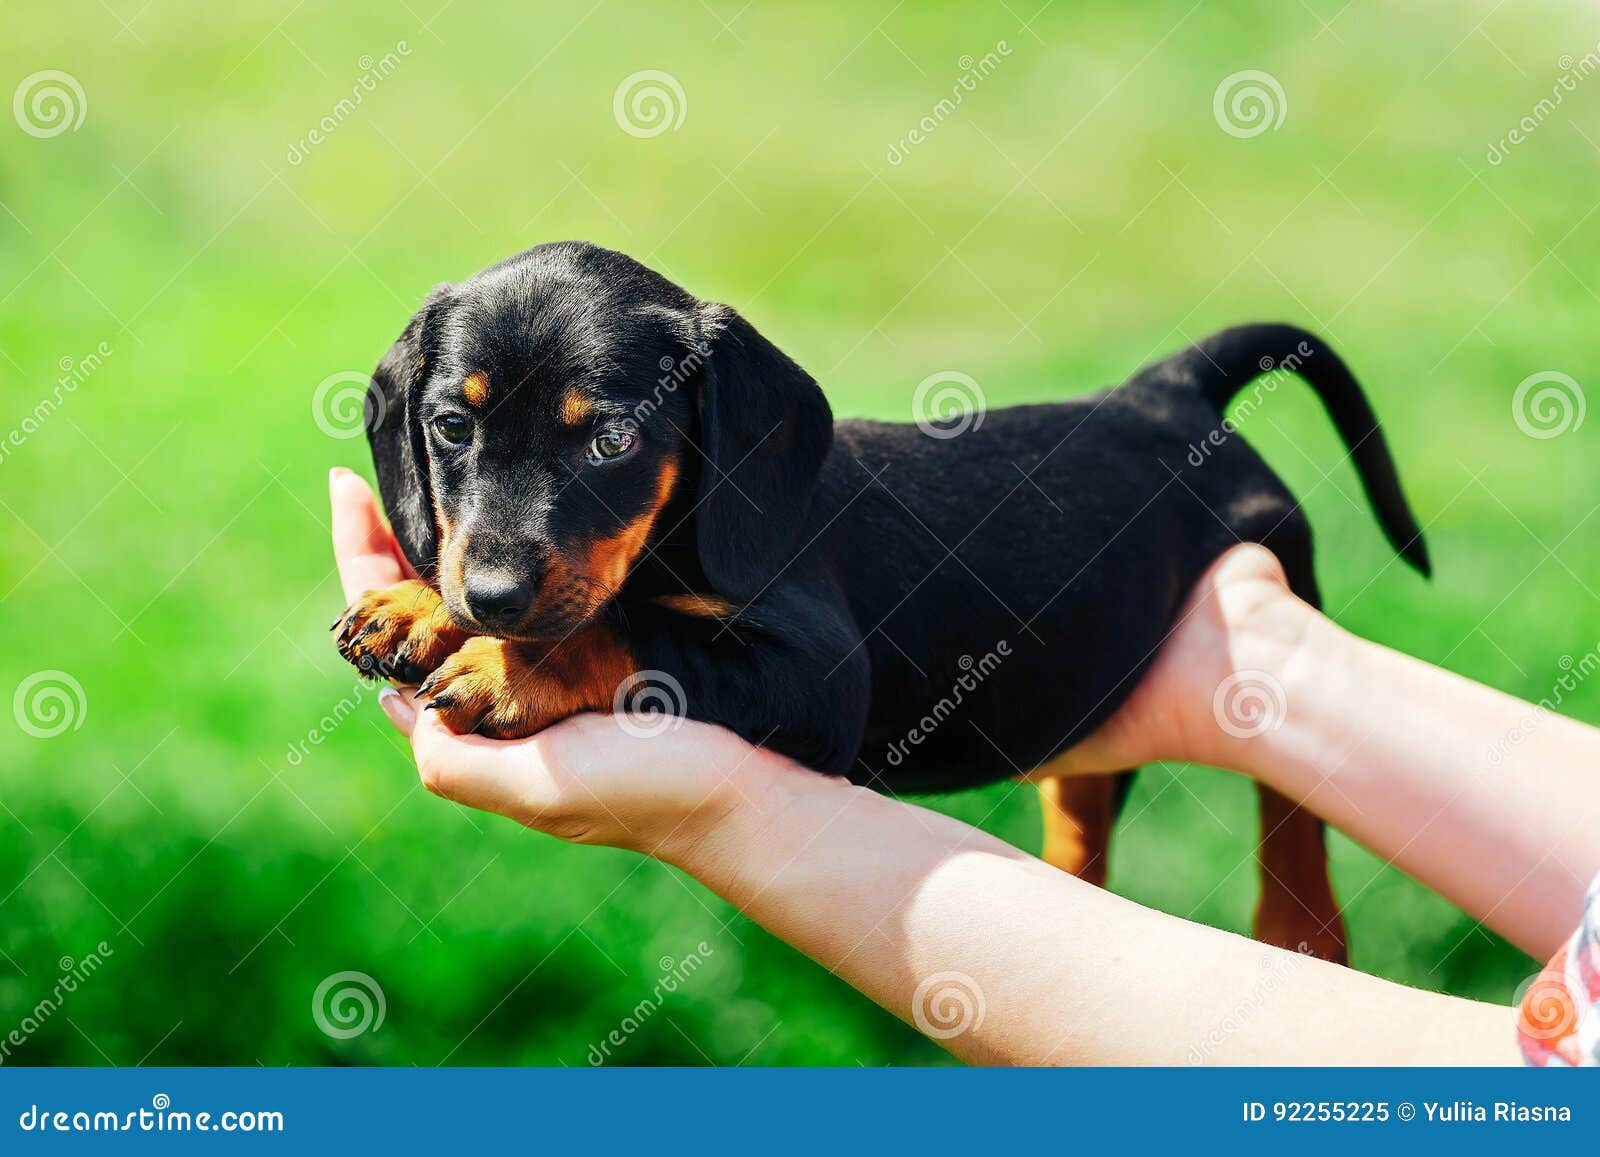 girl dachshund